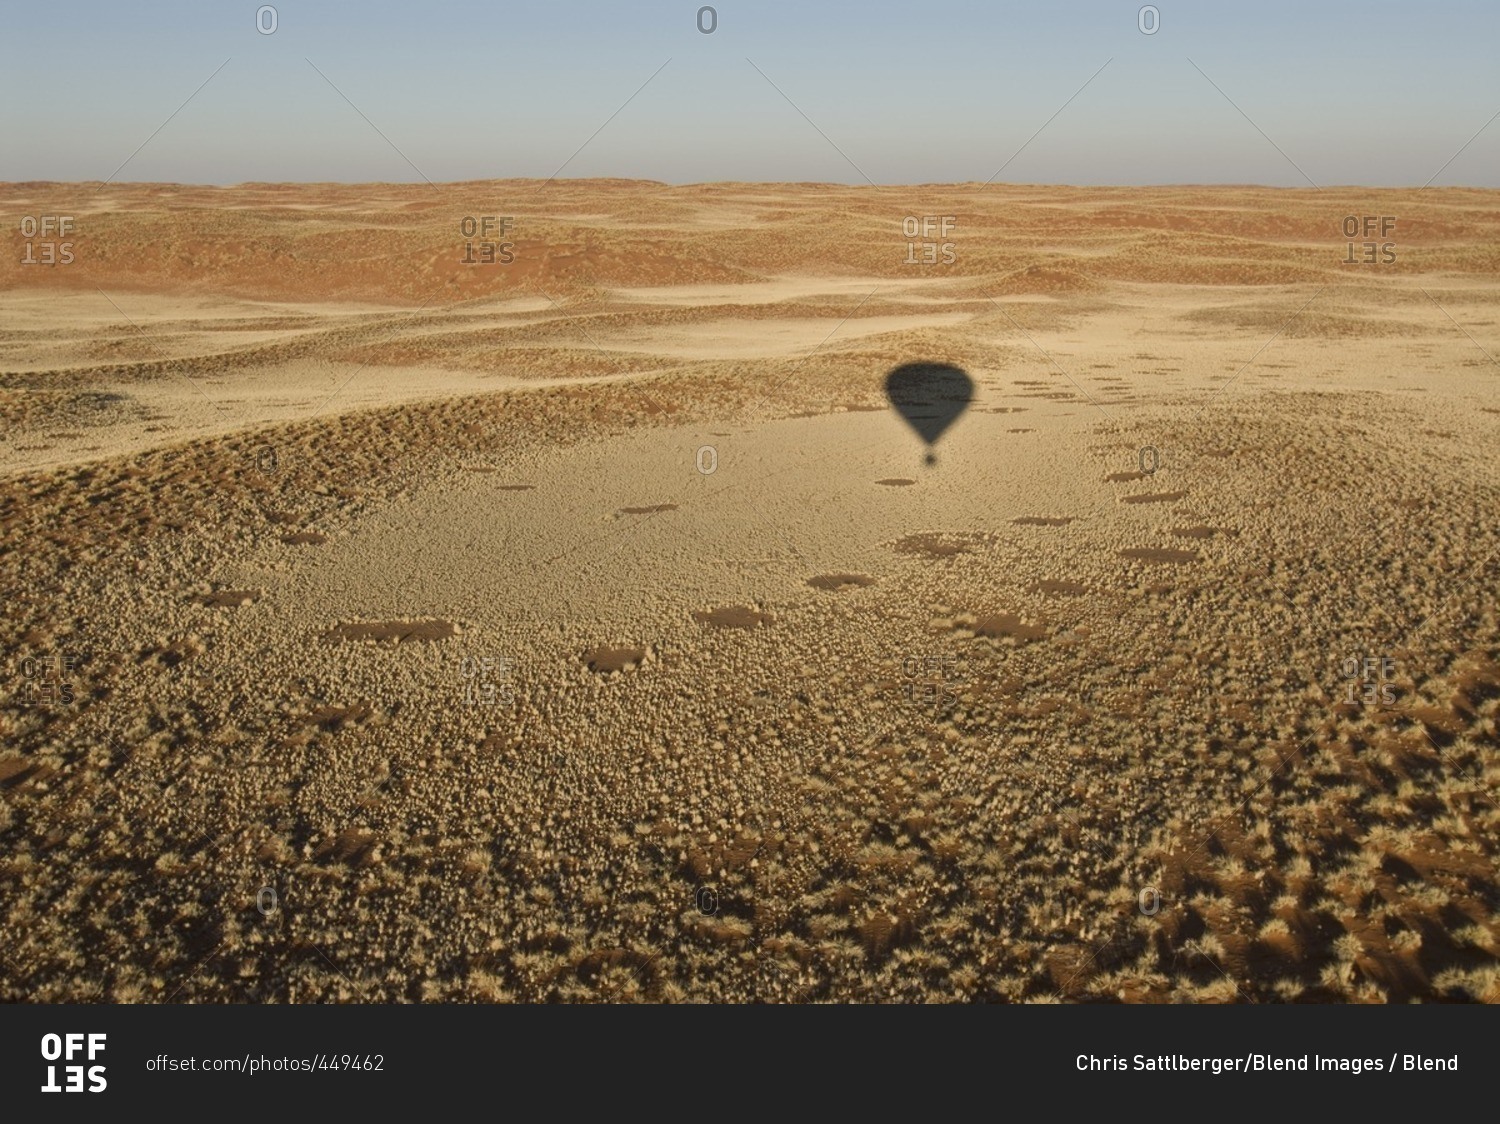 Shadow of hot air balloon over desert